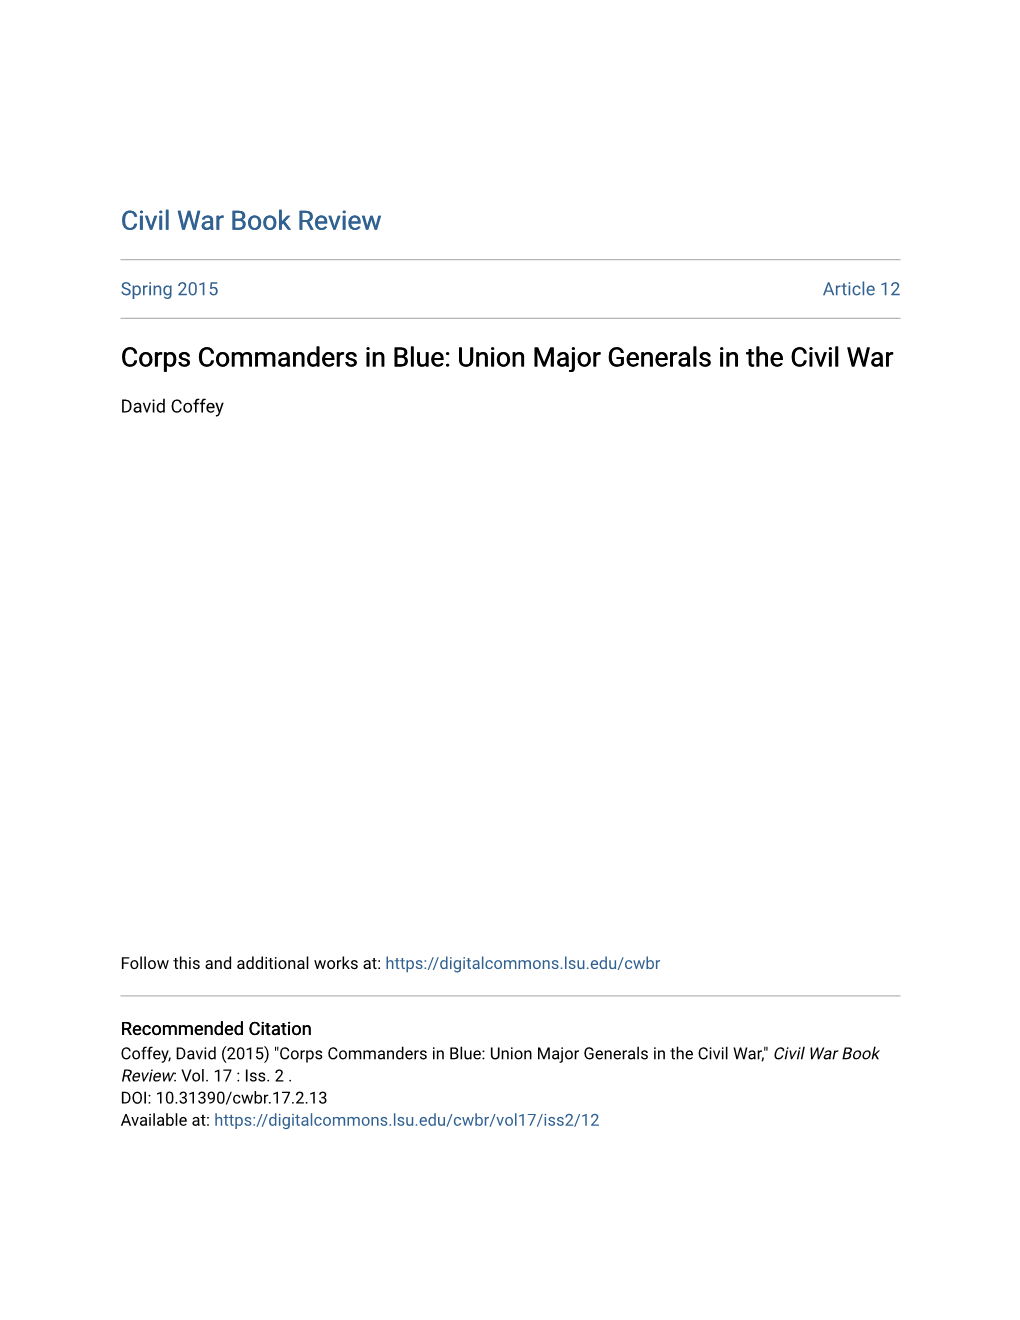 Union Major Generals in the Civil War